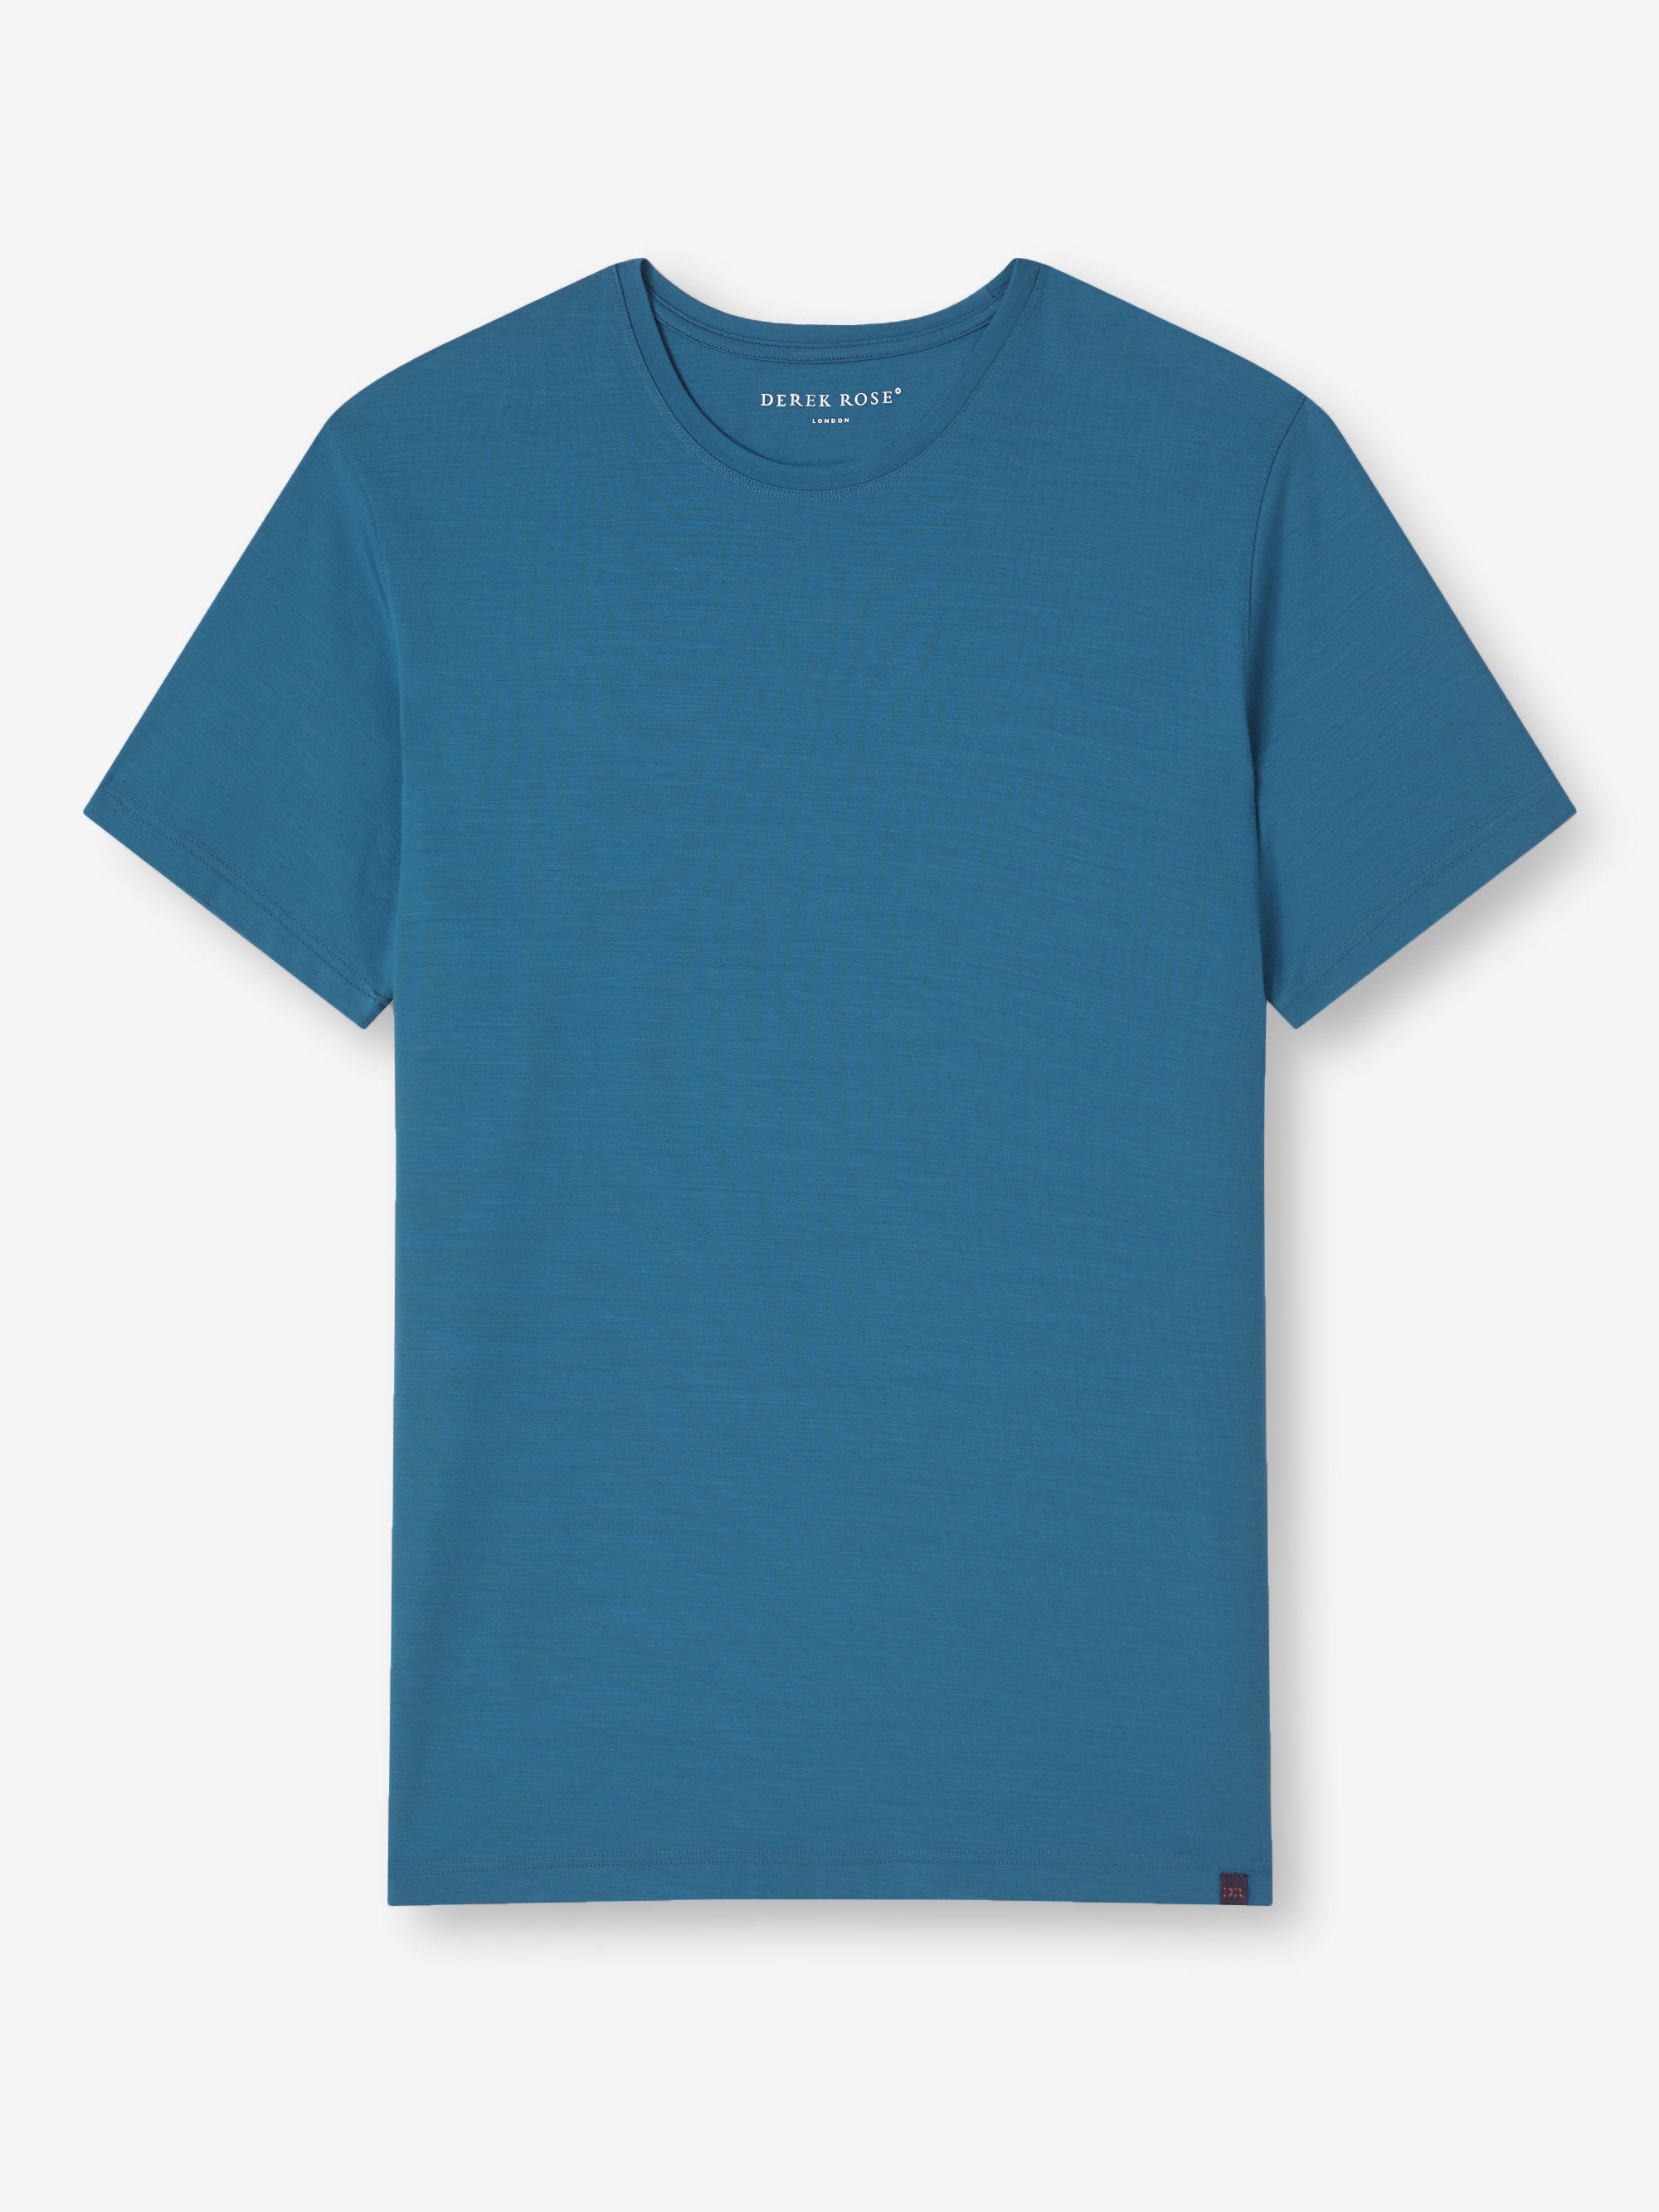 Men's T-Shirt Basel Micro Modal Stretch Ocean